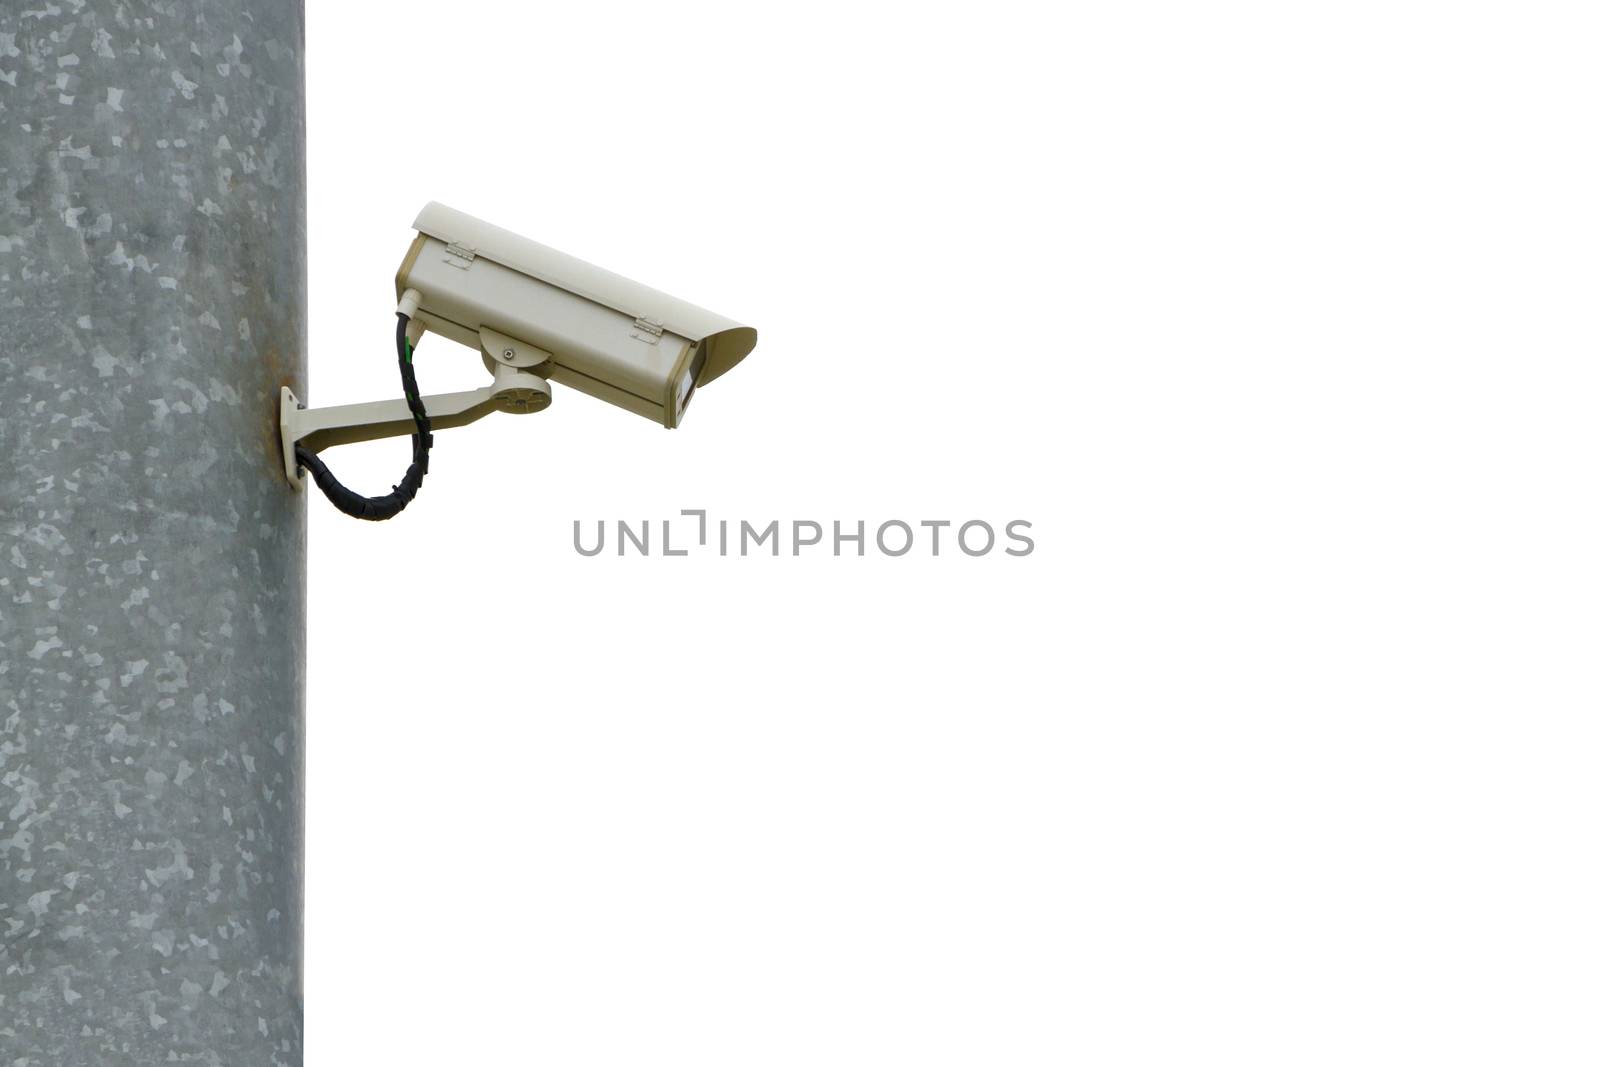 Security Camera isolate on white background